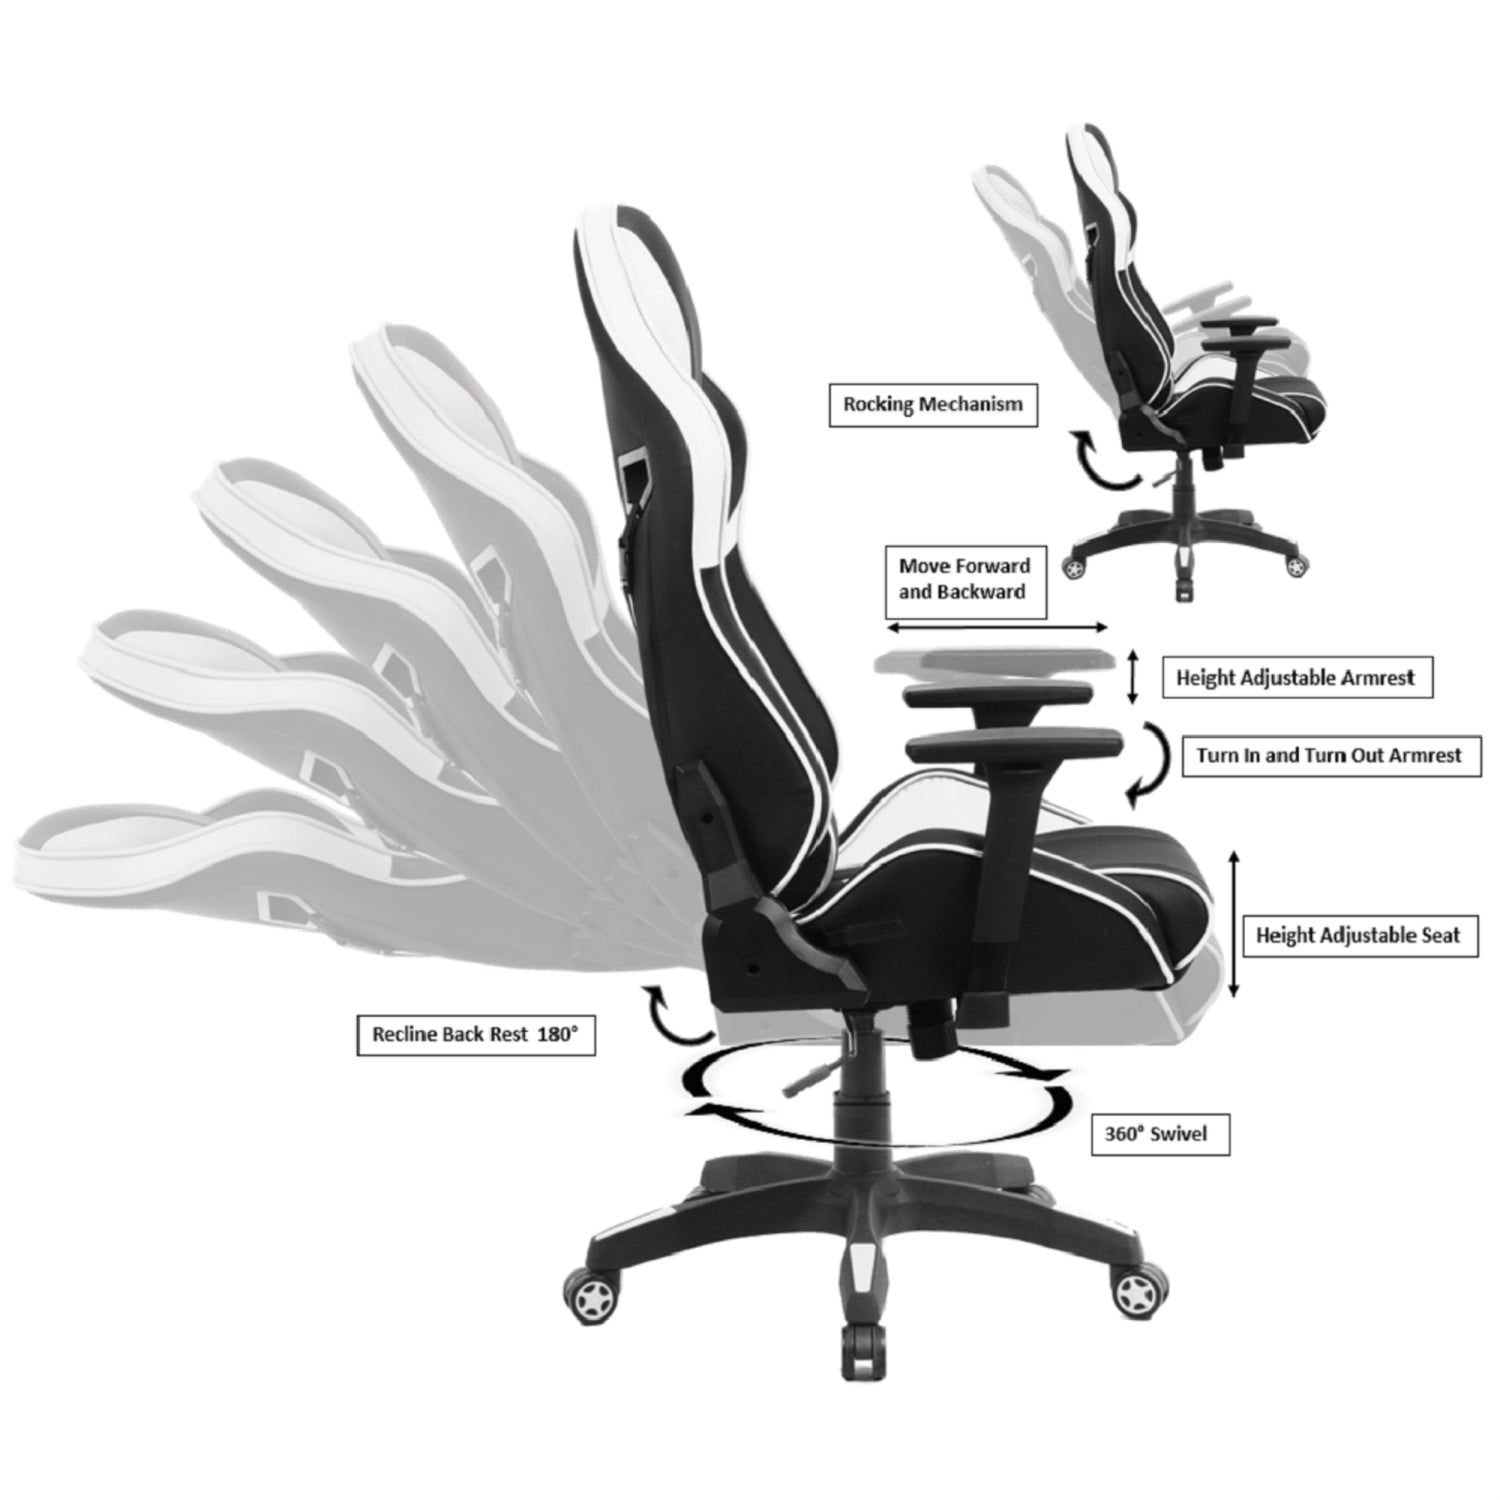 ViscoLogic SHROUD x Professional Grade Ergonomic High-Back Racing Sports Style Computer Gaming Chair